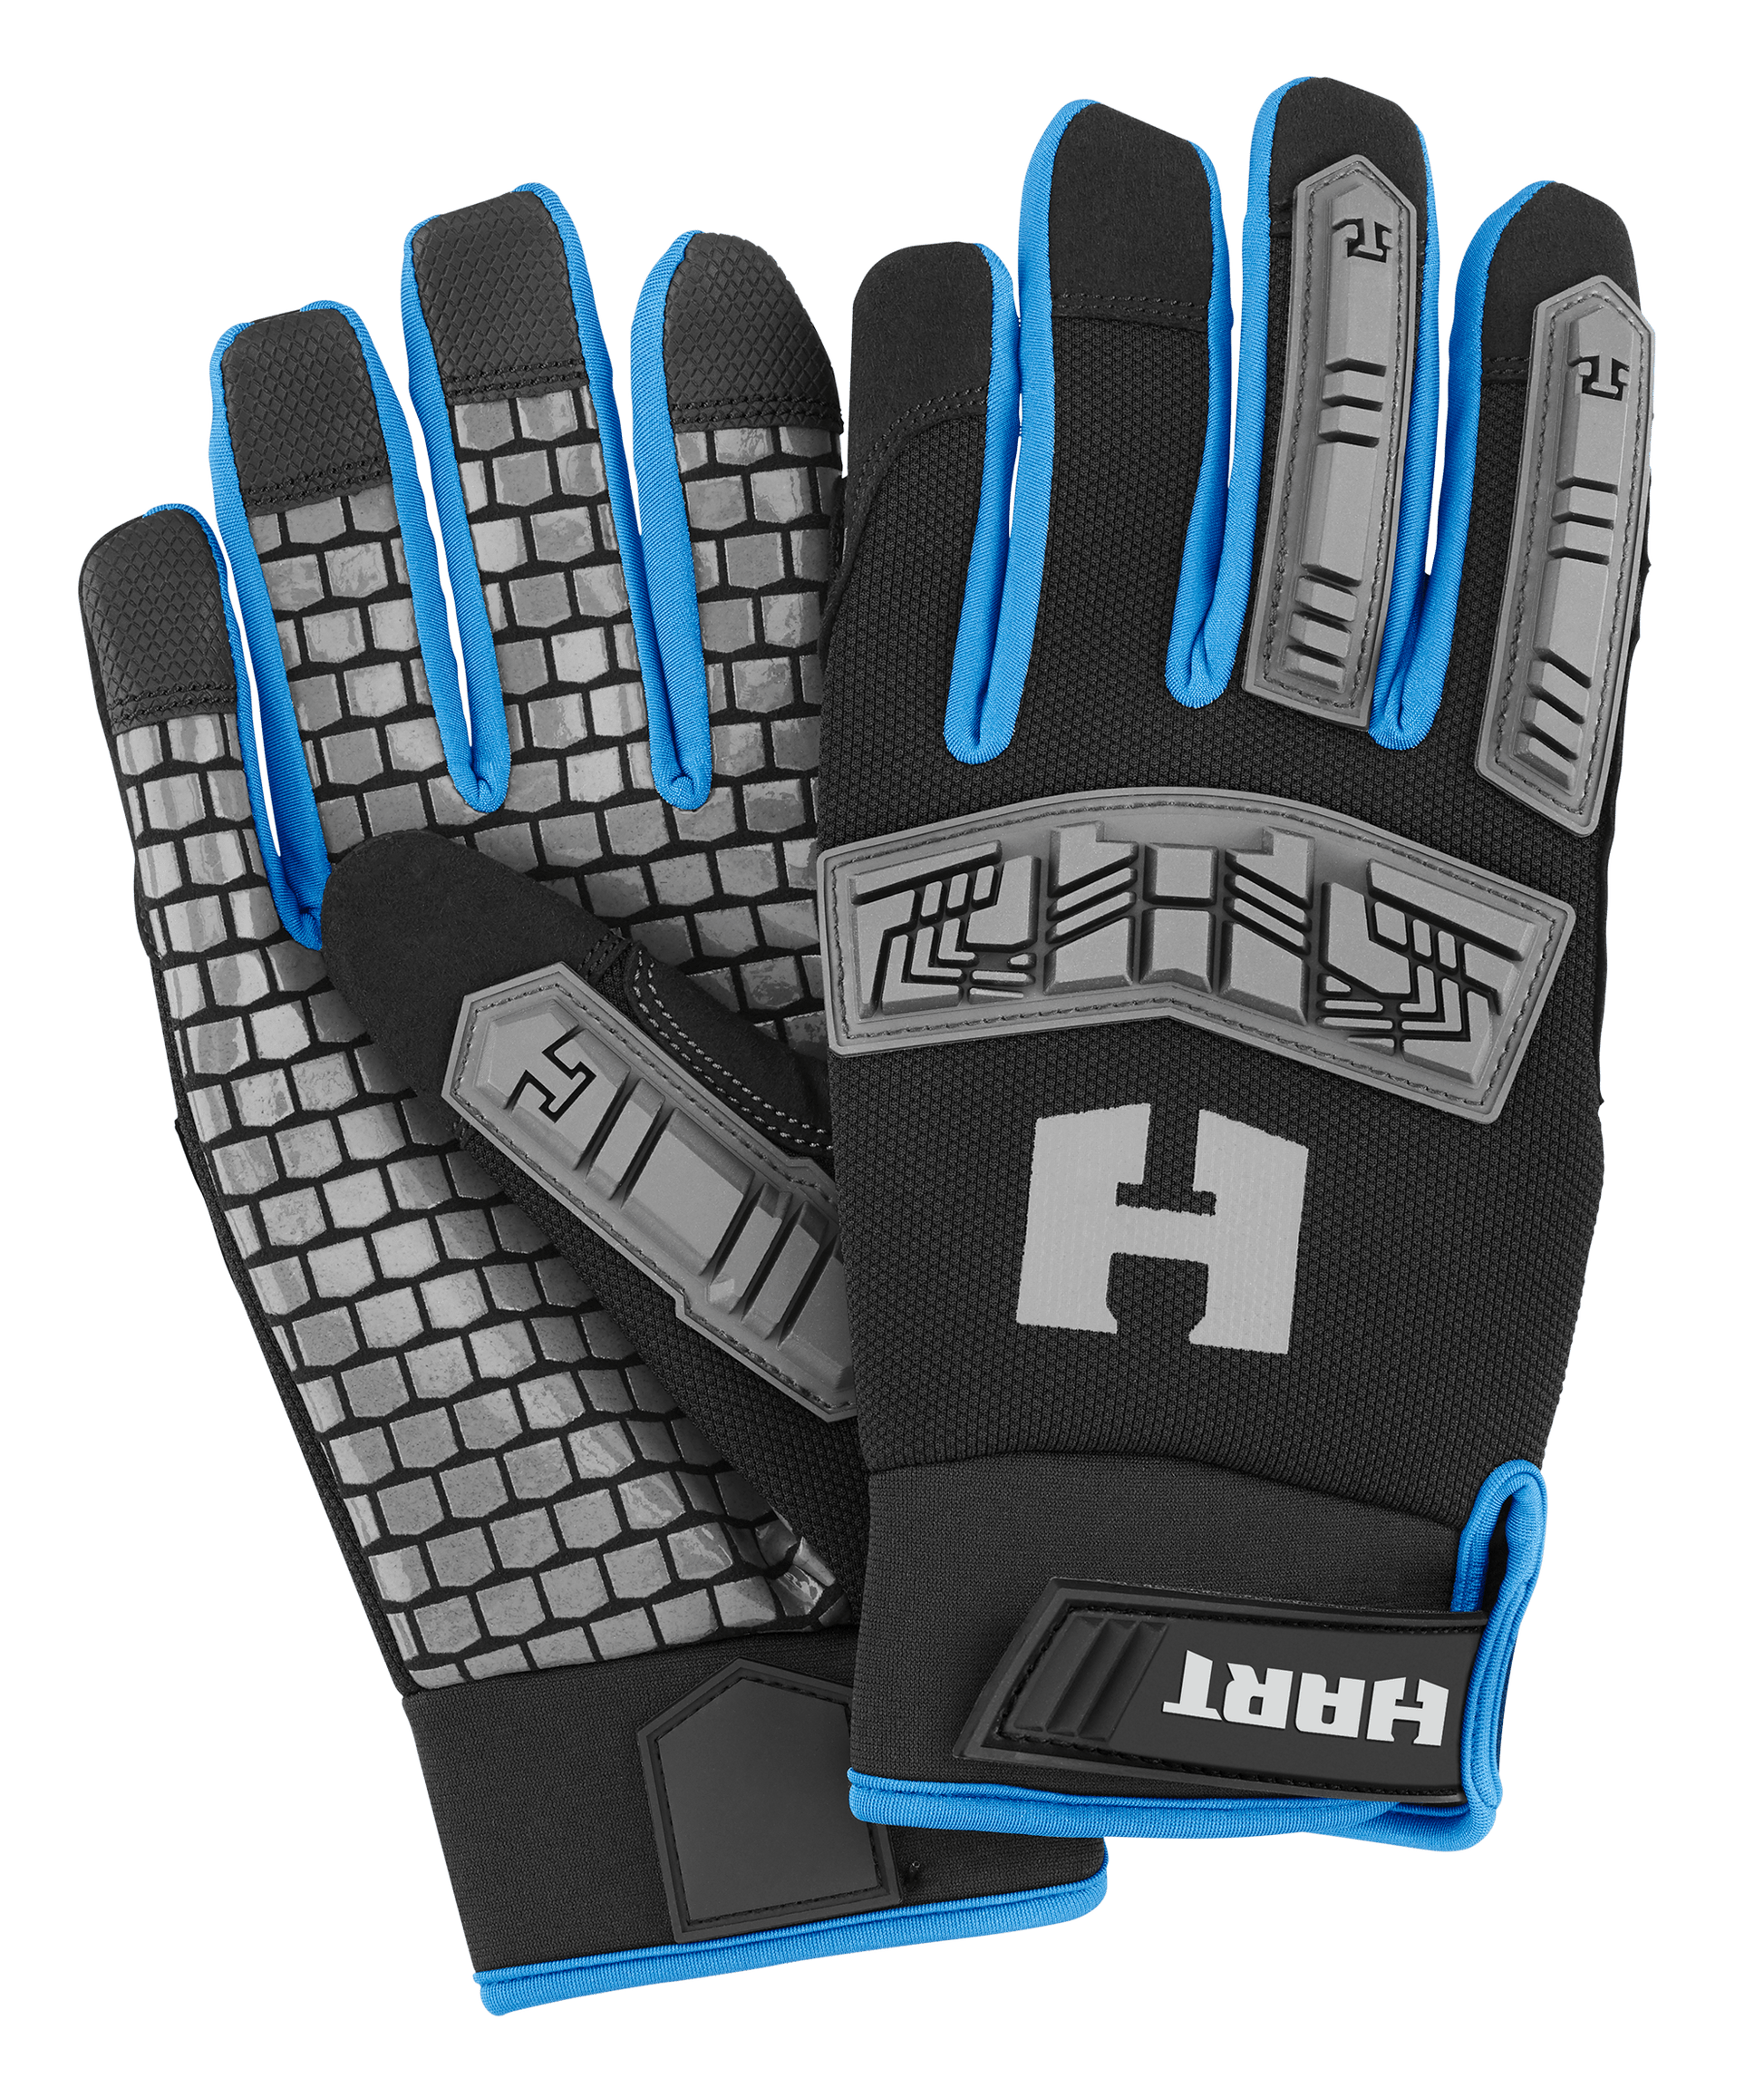 Performance Impact Gloves - Extra Large